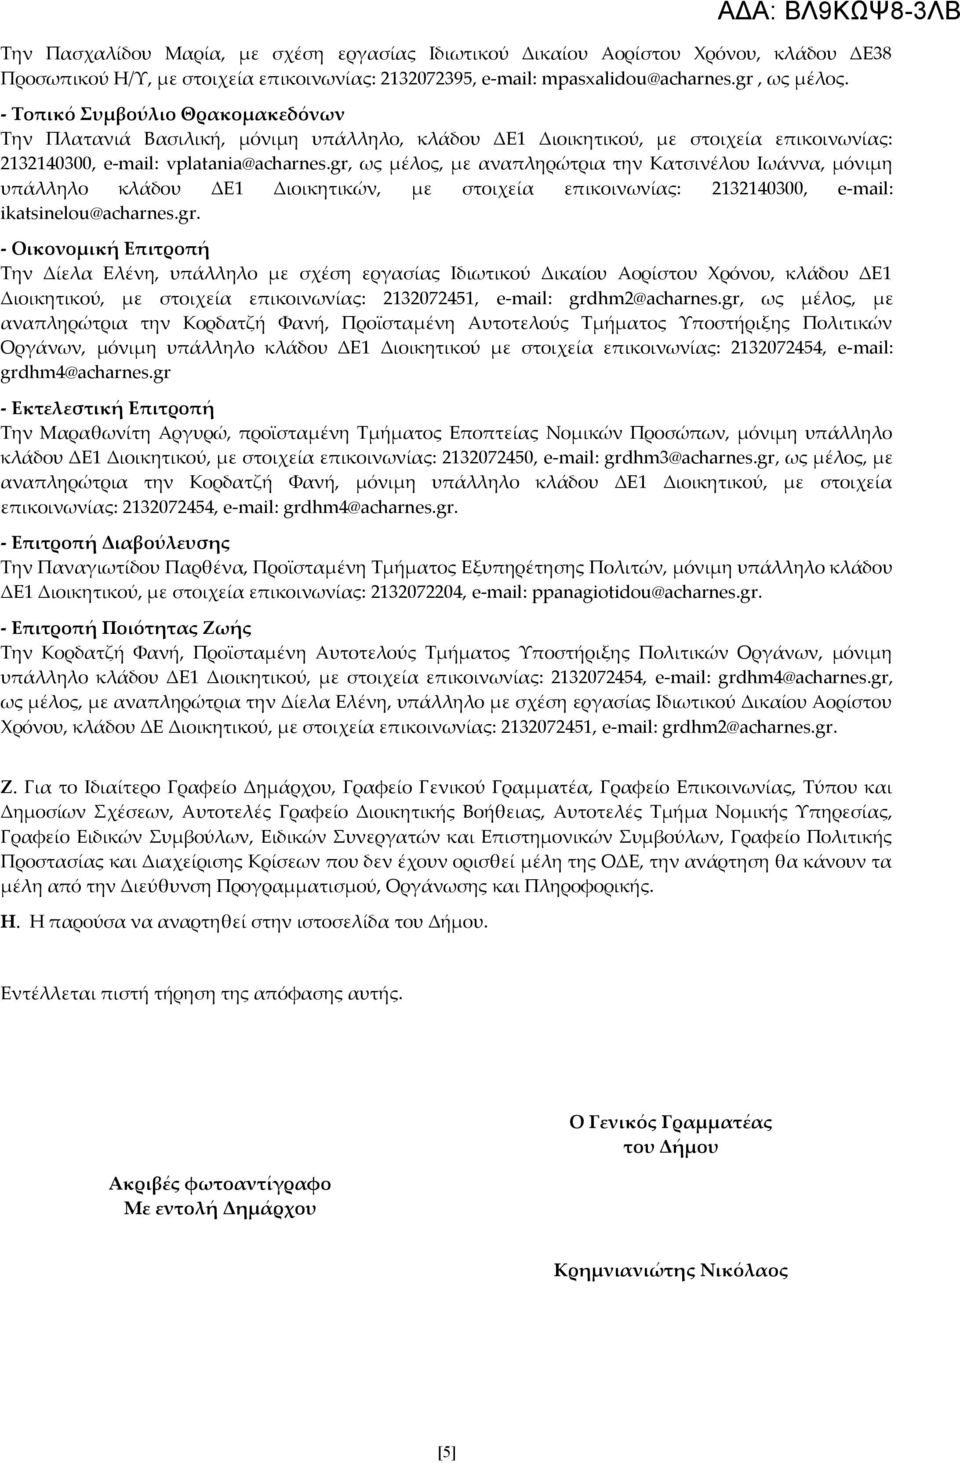 gr, ως μέλος, με αναπληρώτρια την Κατσινέλου Ιωάννα, μόνιμη υπάλληλο κλάδου ΔΕ1 Διοικητικών, με στοιχεία επικοινωνίας: 2132140300, e-mail: ikatsinelou@acharnes.gr. - Οικονομική Επιτροπή Την Δίελα Ελένη, υπάλληλο με σχέση εργασίας Ιδιωτικού Δικαίου Αορίστου Χρόνου, κλάδου ΔΕ1 Διοικητικού, με στοιχεία επικοινωνίας: 2132072451, e-mail: grdhm2@acharnes.